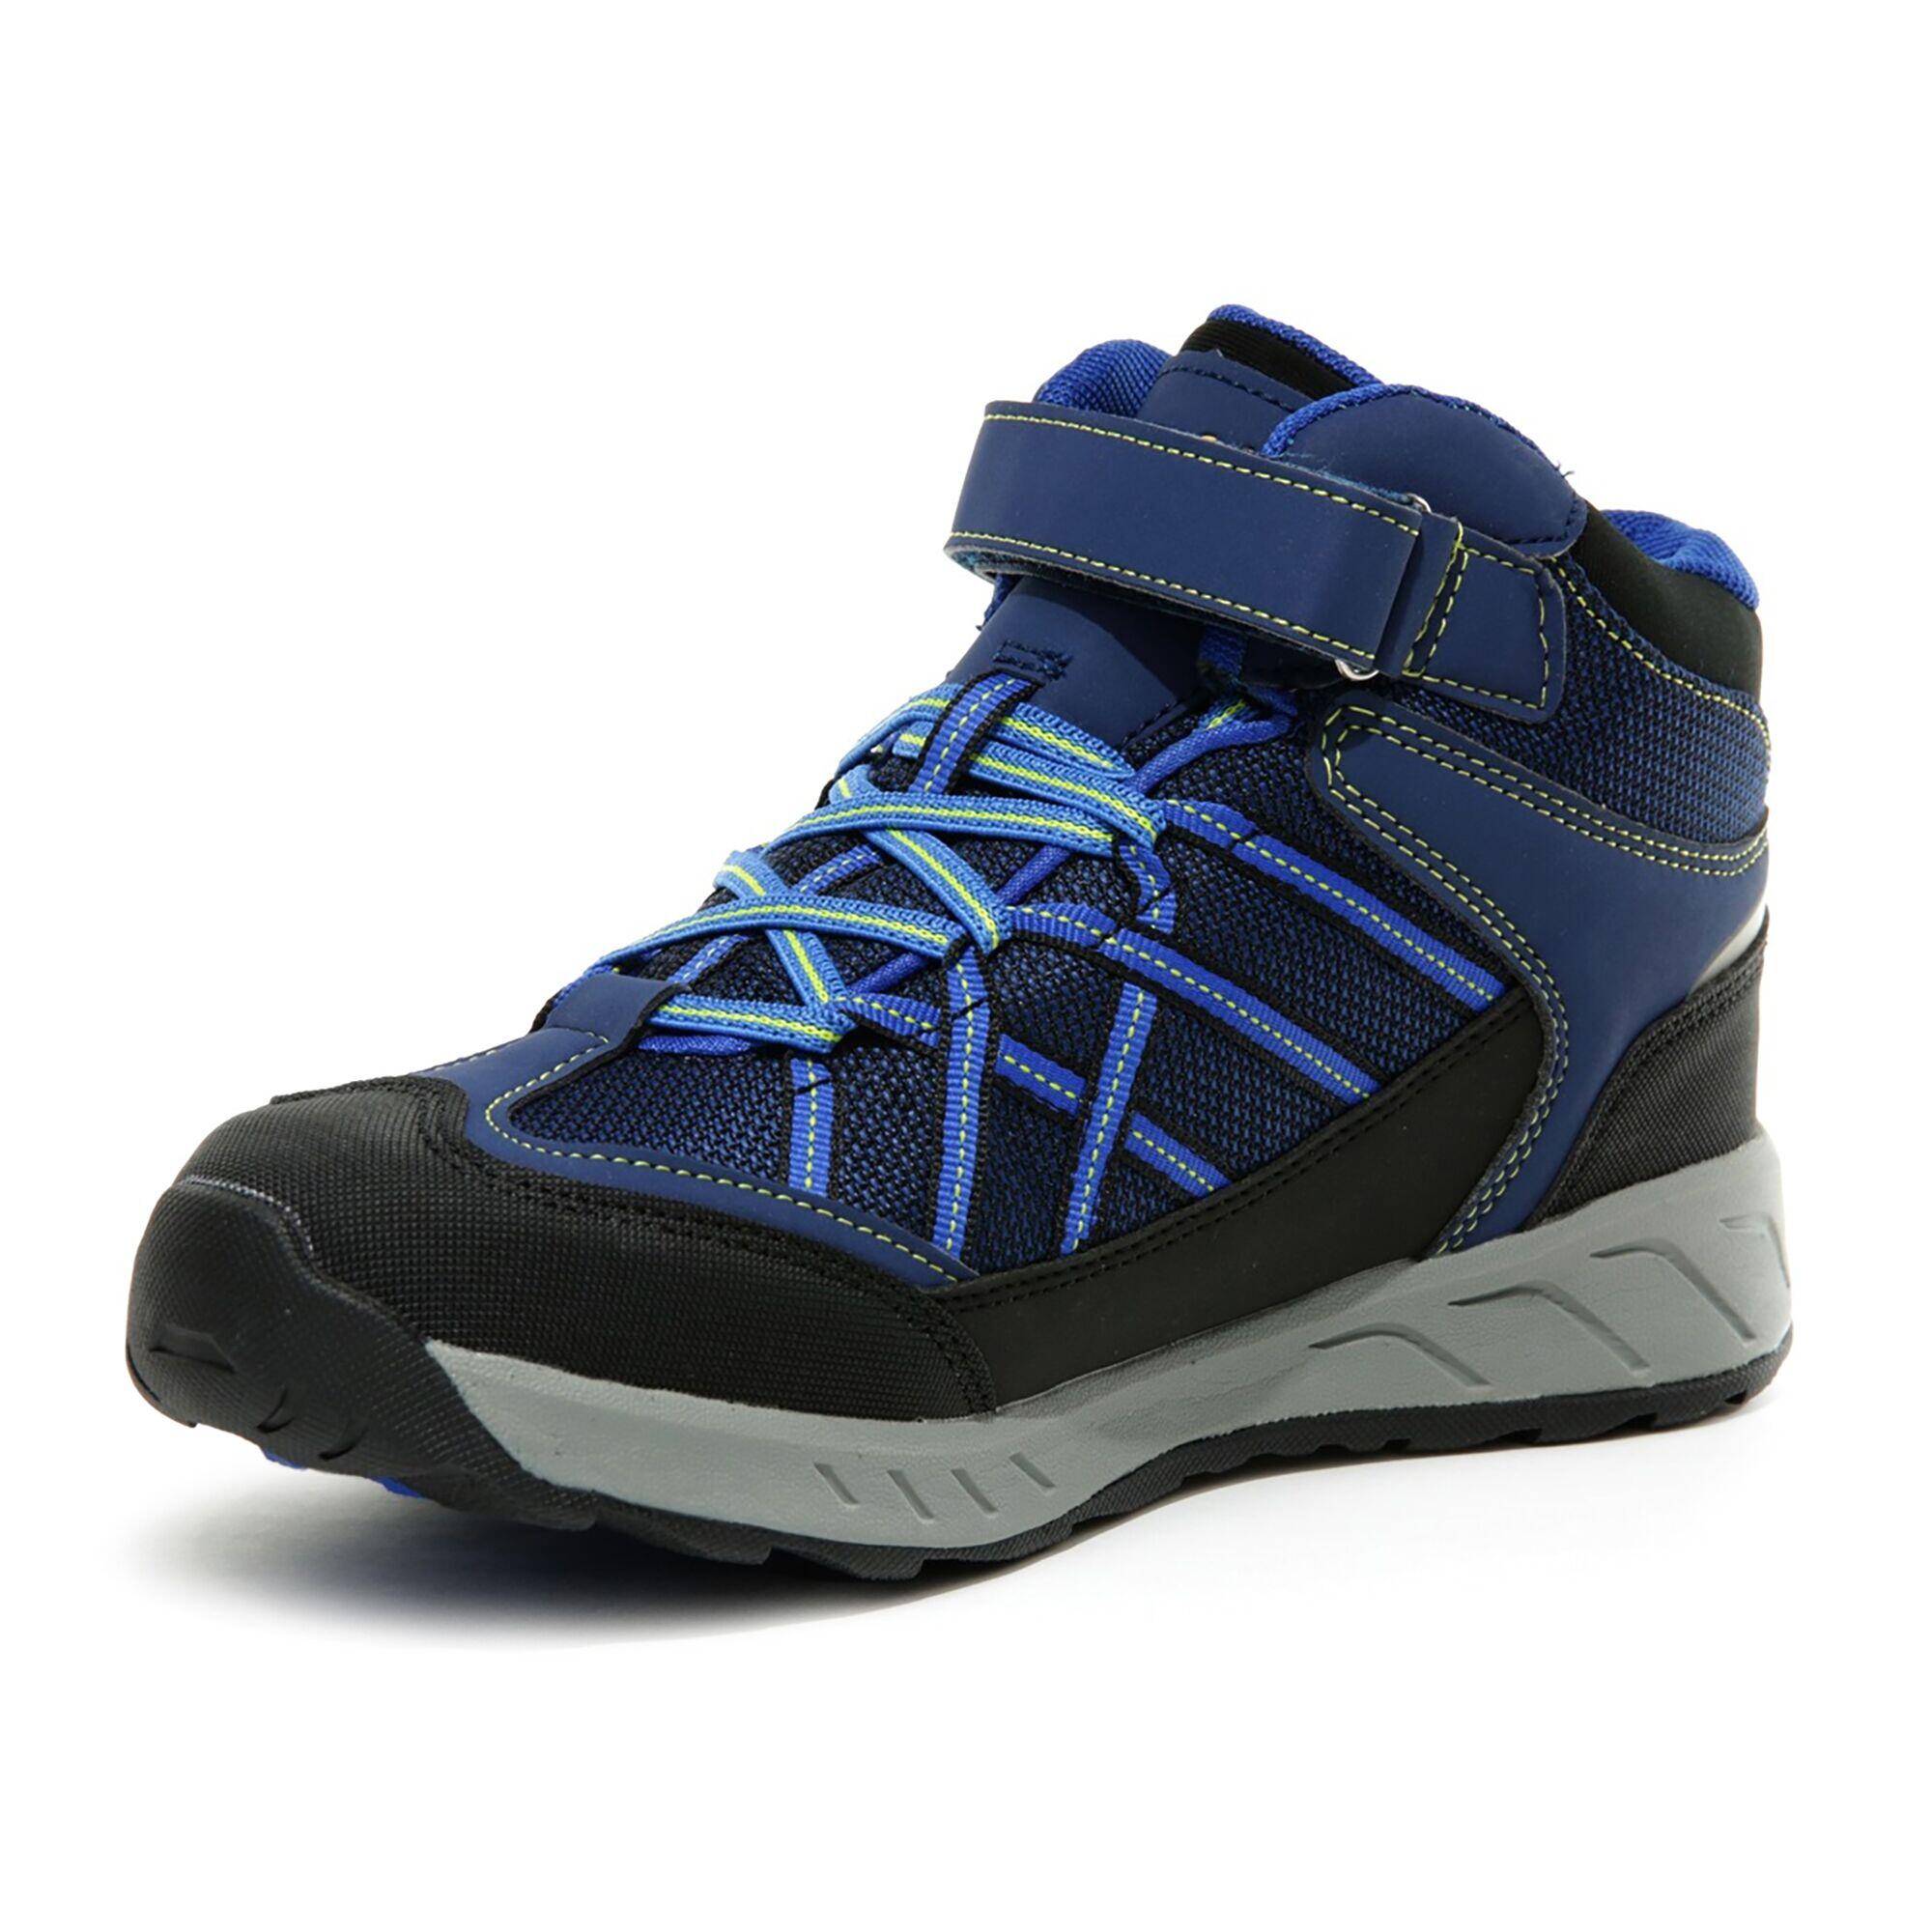 Samaris V Kids' Hiking Waterproof Mid Boots - Dark Blue/Neon Yellow 3/6